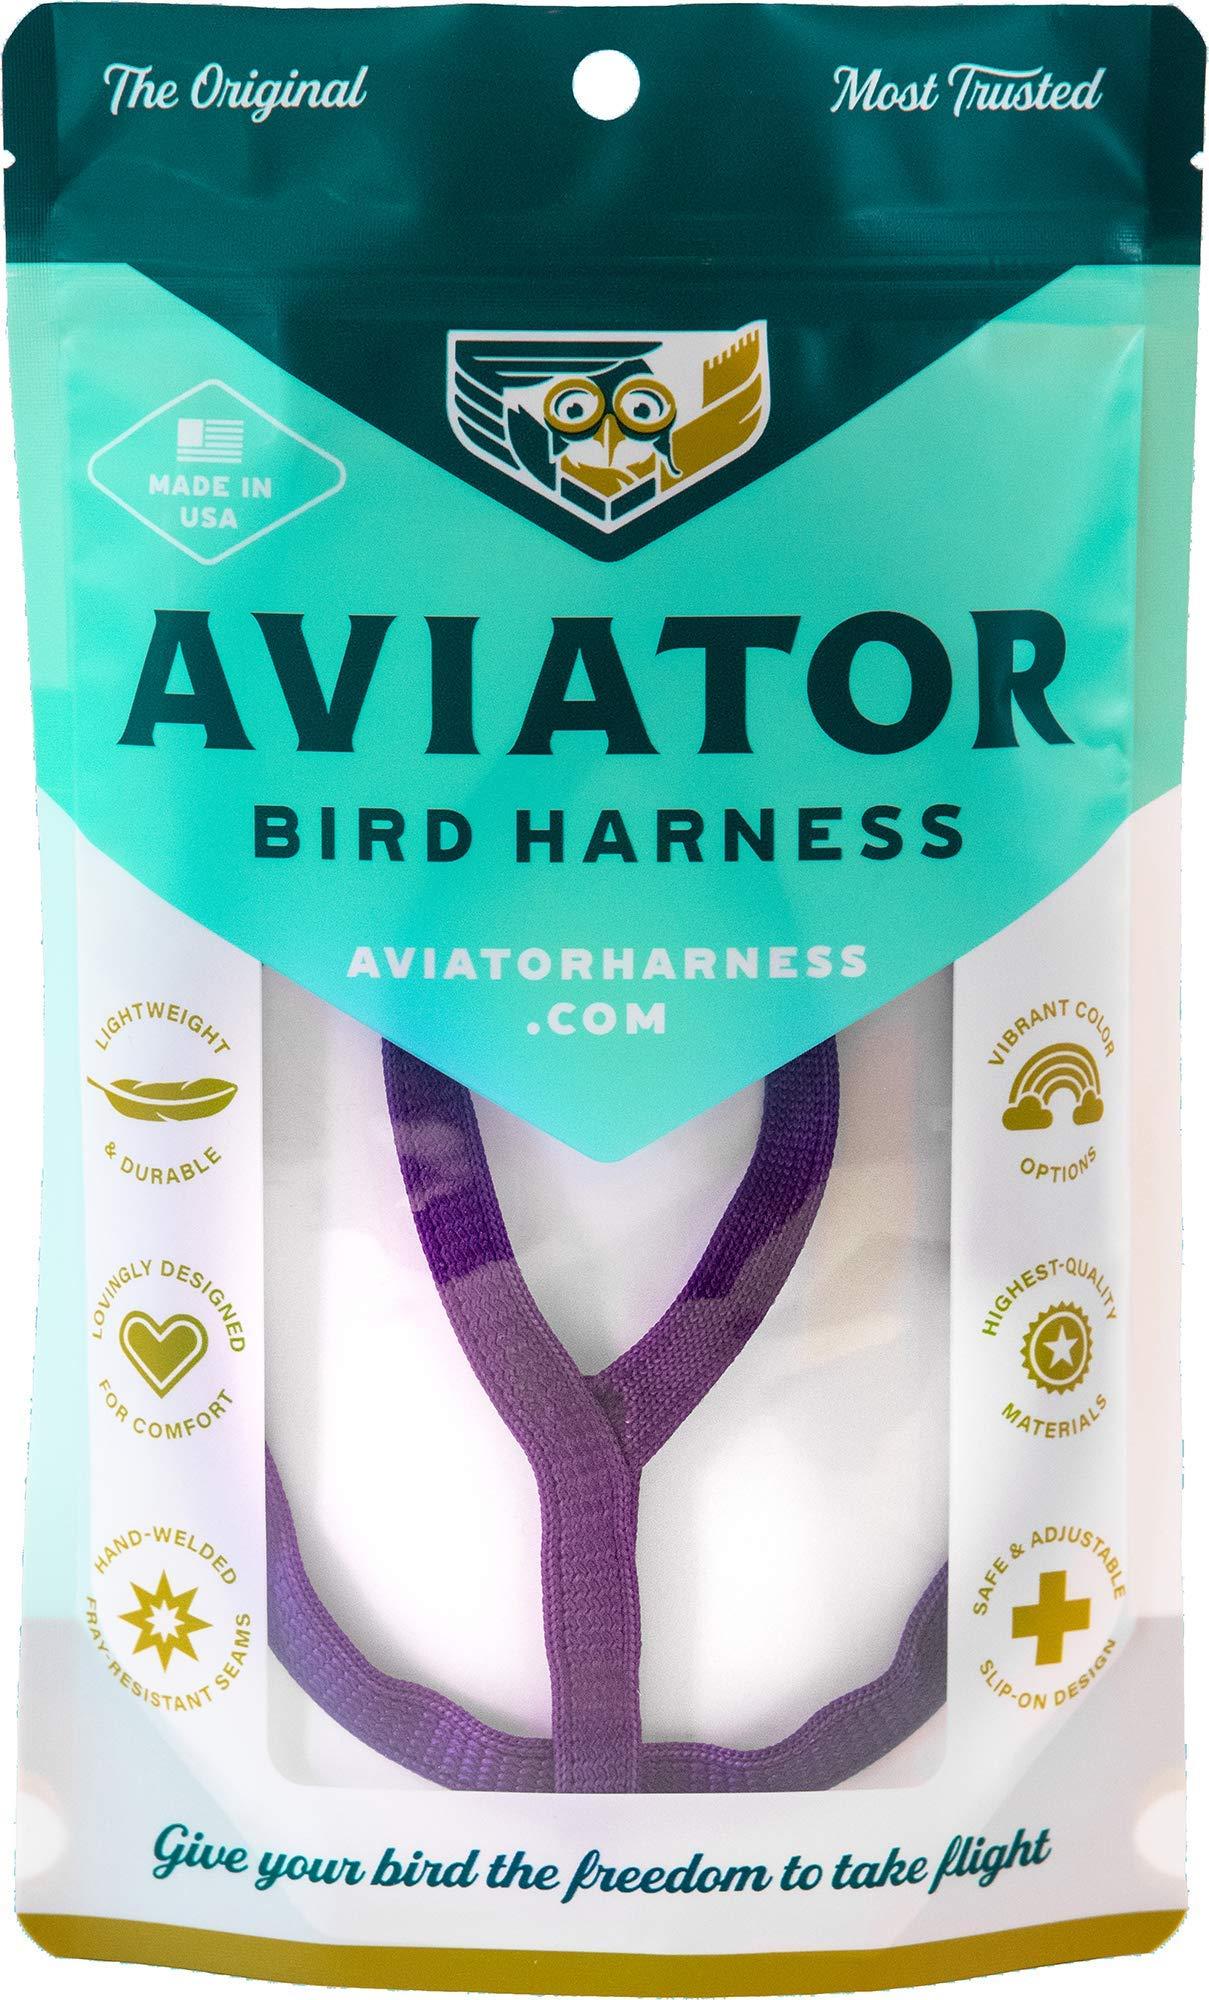 The AVIATOR Pet Bird Harness and Leash: Medium Purple